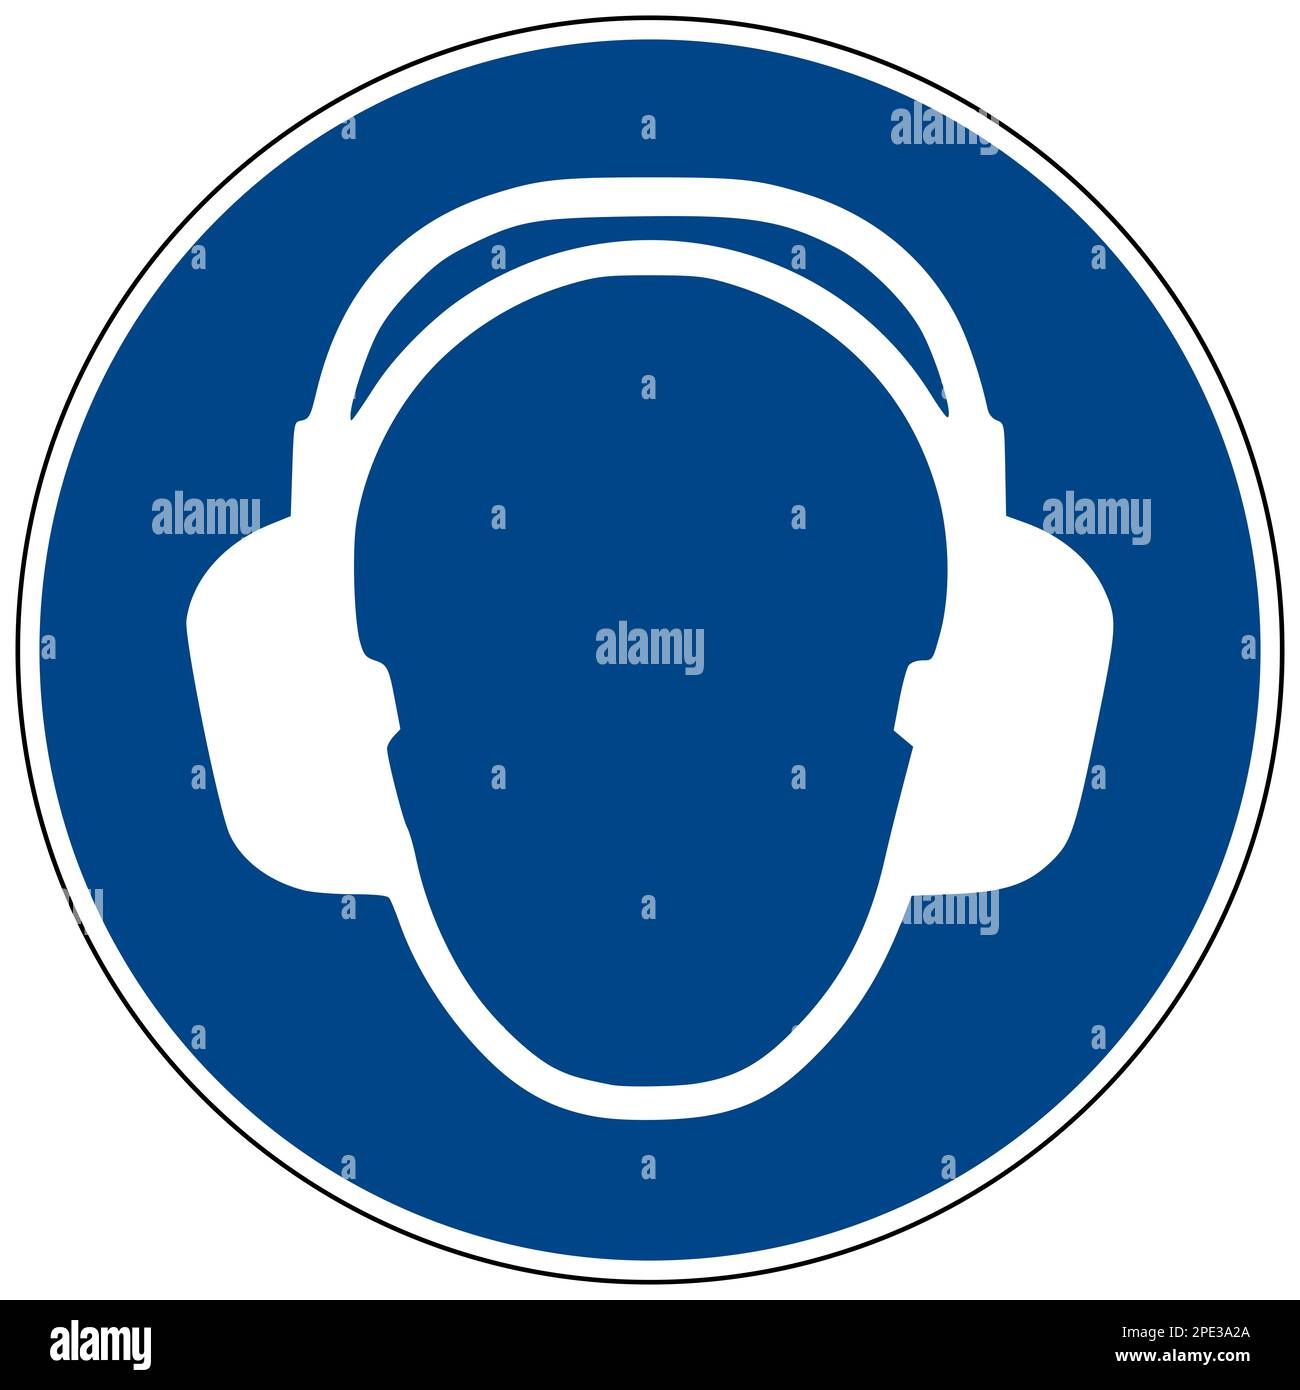 STAHLWERK Lärmschutz Kapselgehörschutz Gehörschutz Arbeitsschutz